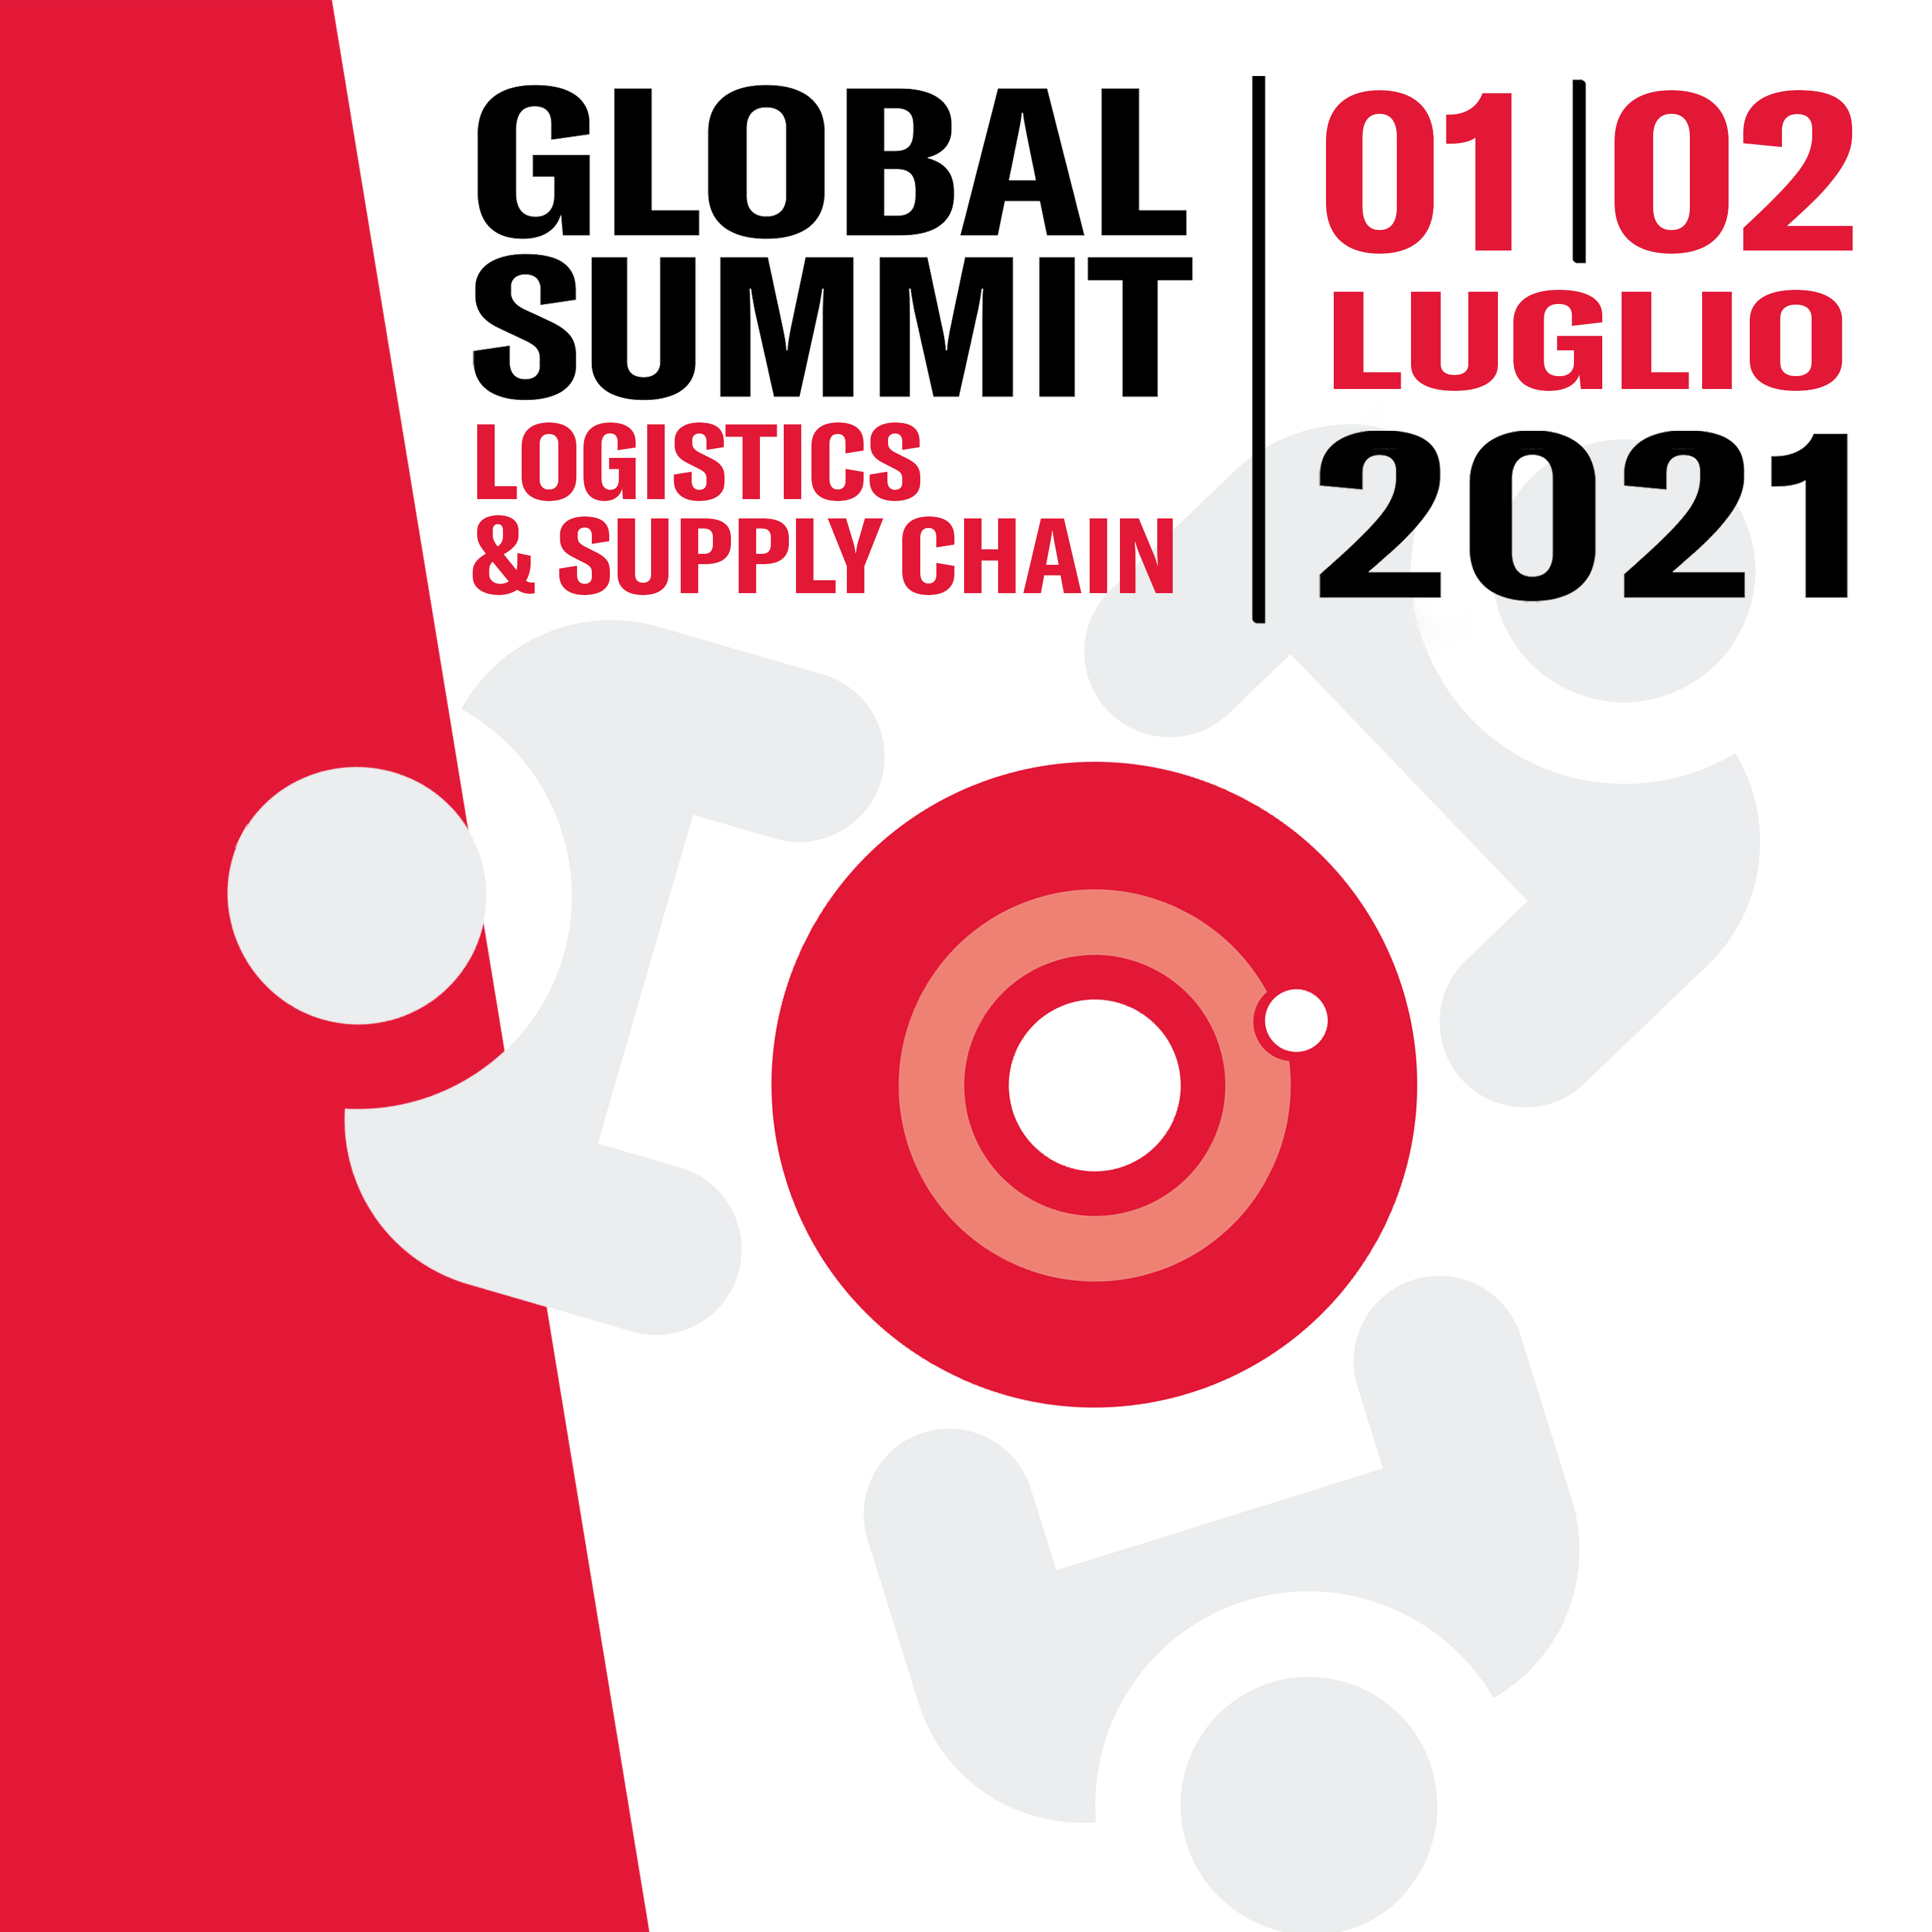 Makeitalia Supply Chain Academy will attend Global Summit Logistics & Supply Chain event